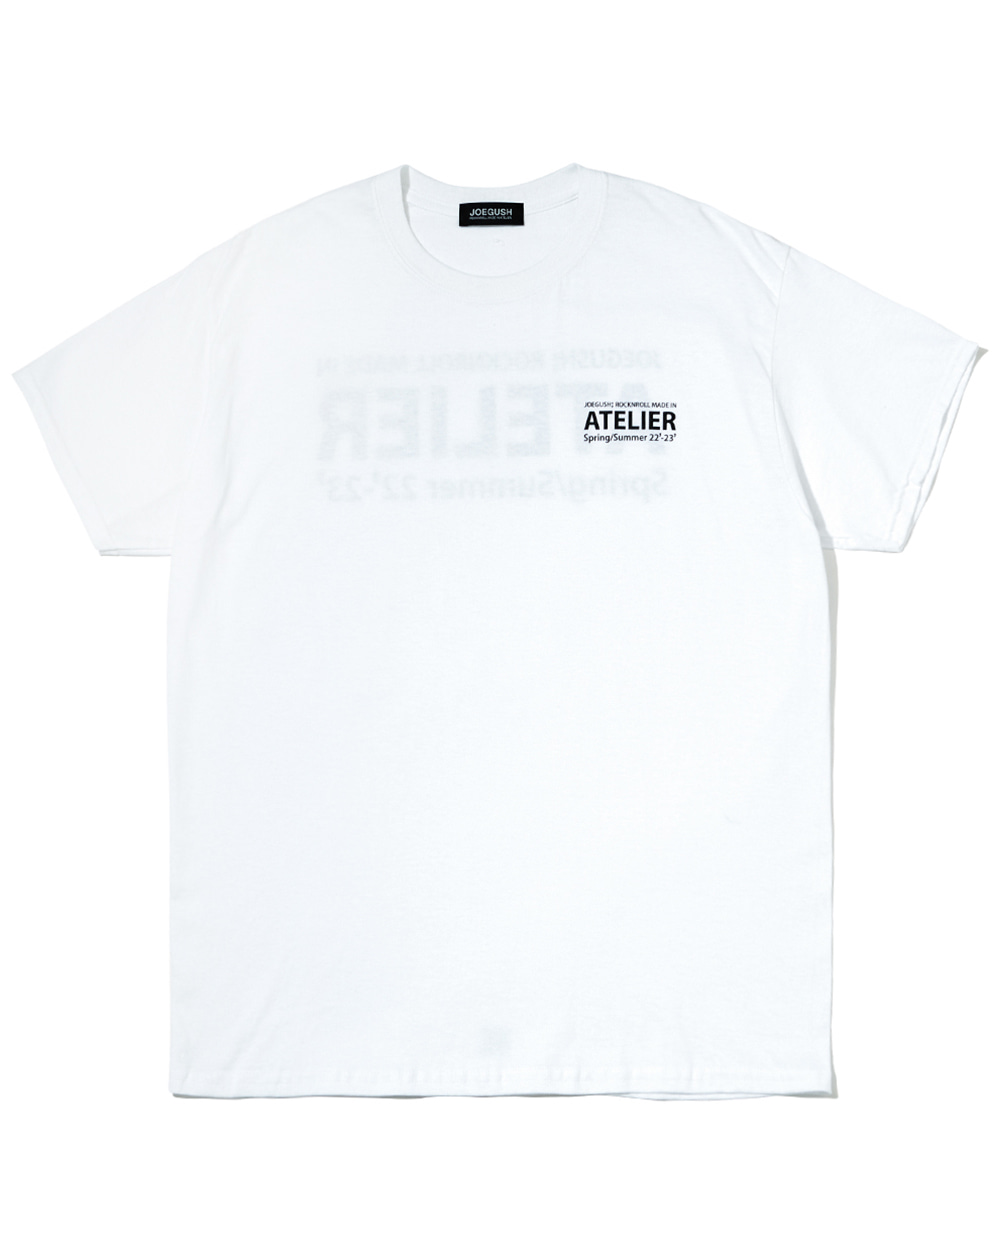 Atelier T-Shirt (White)